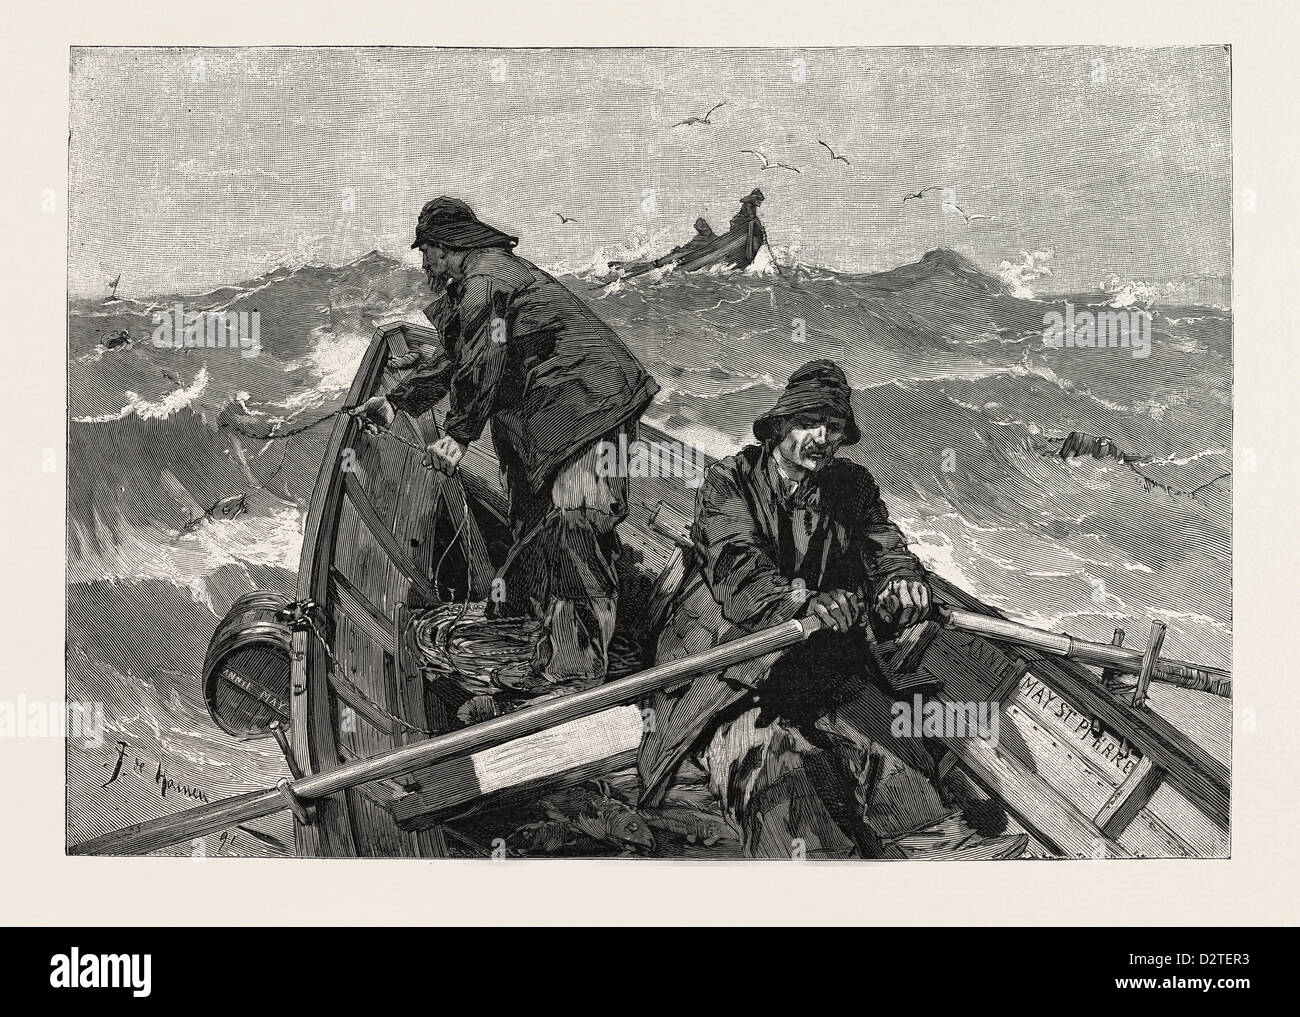 La pêche de la morue de Terre-Neuve : LA PÊCHE DU CABILLAUD D'UN DORIS ou bateau à fond plat Banque D'Images